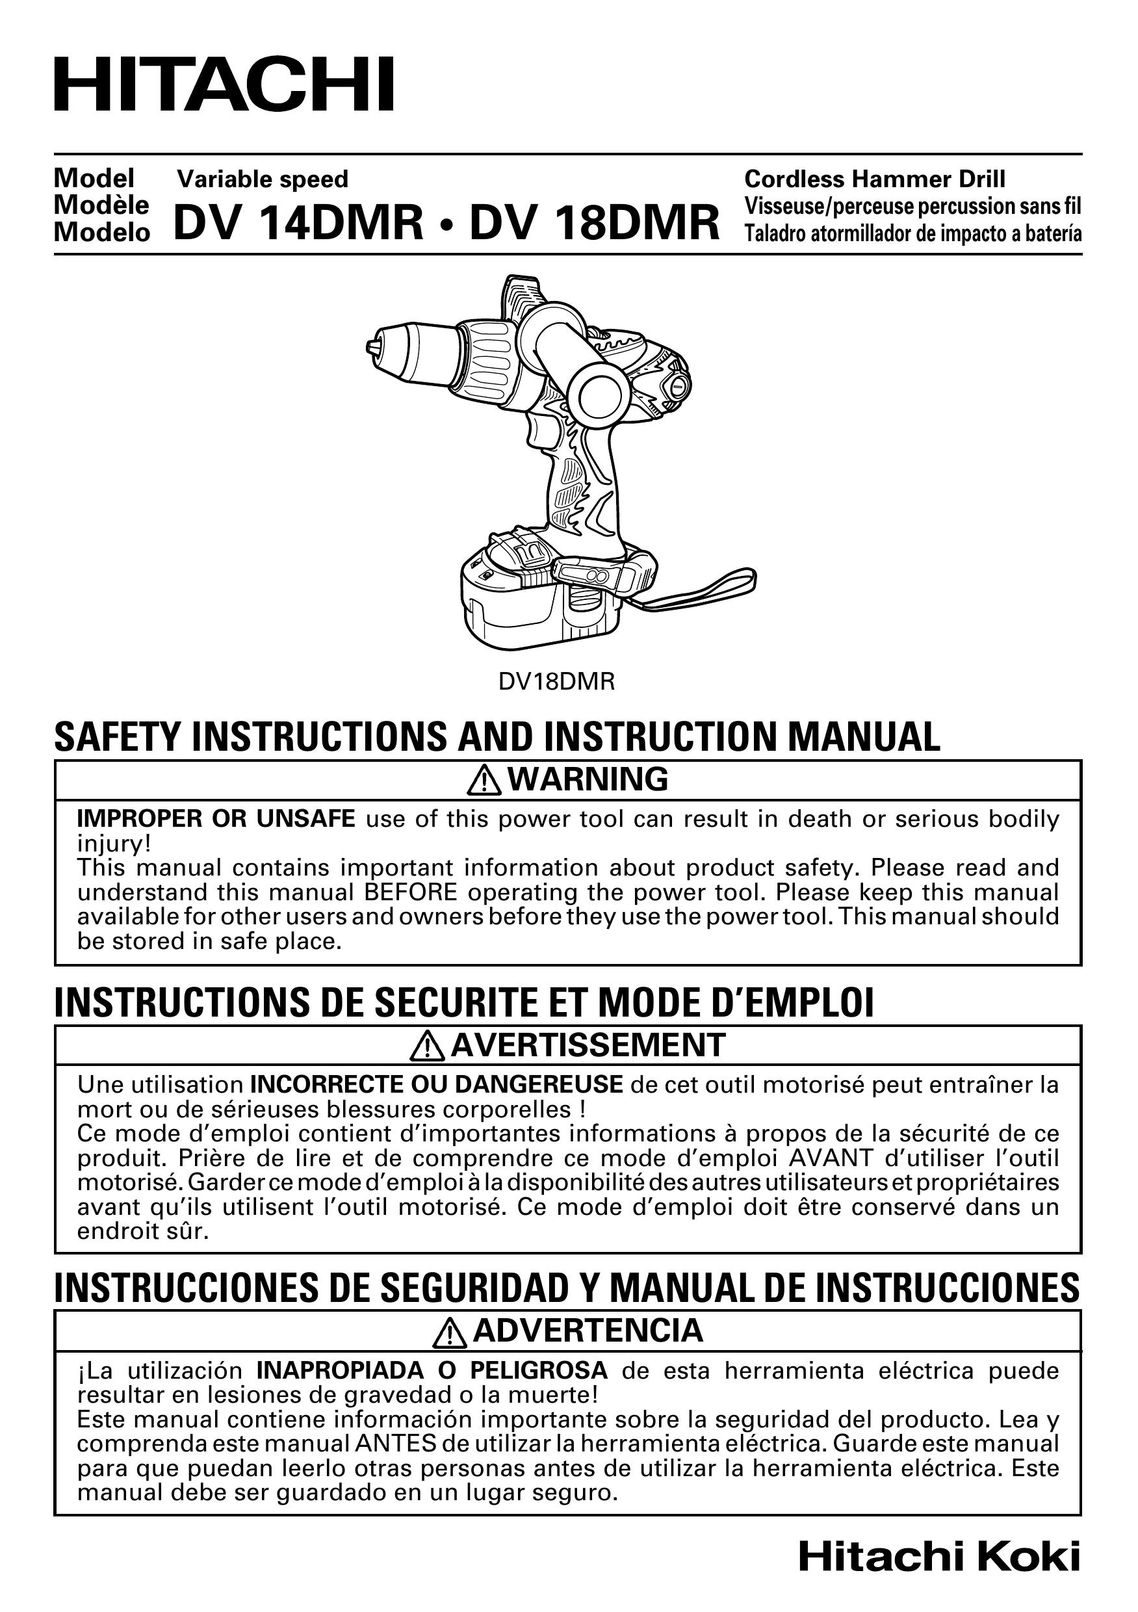 Hitachi DV18DMR Cordless Drill User Manual